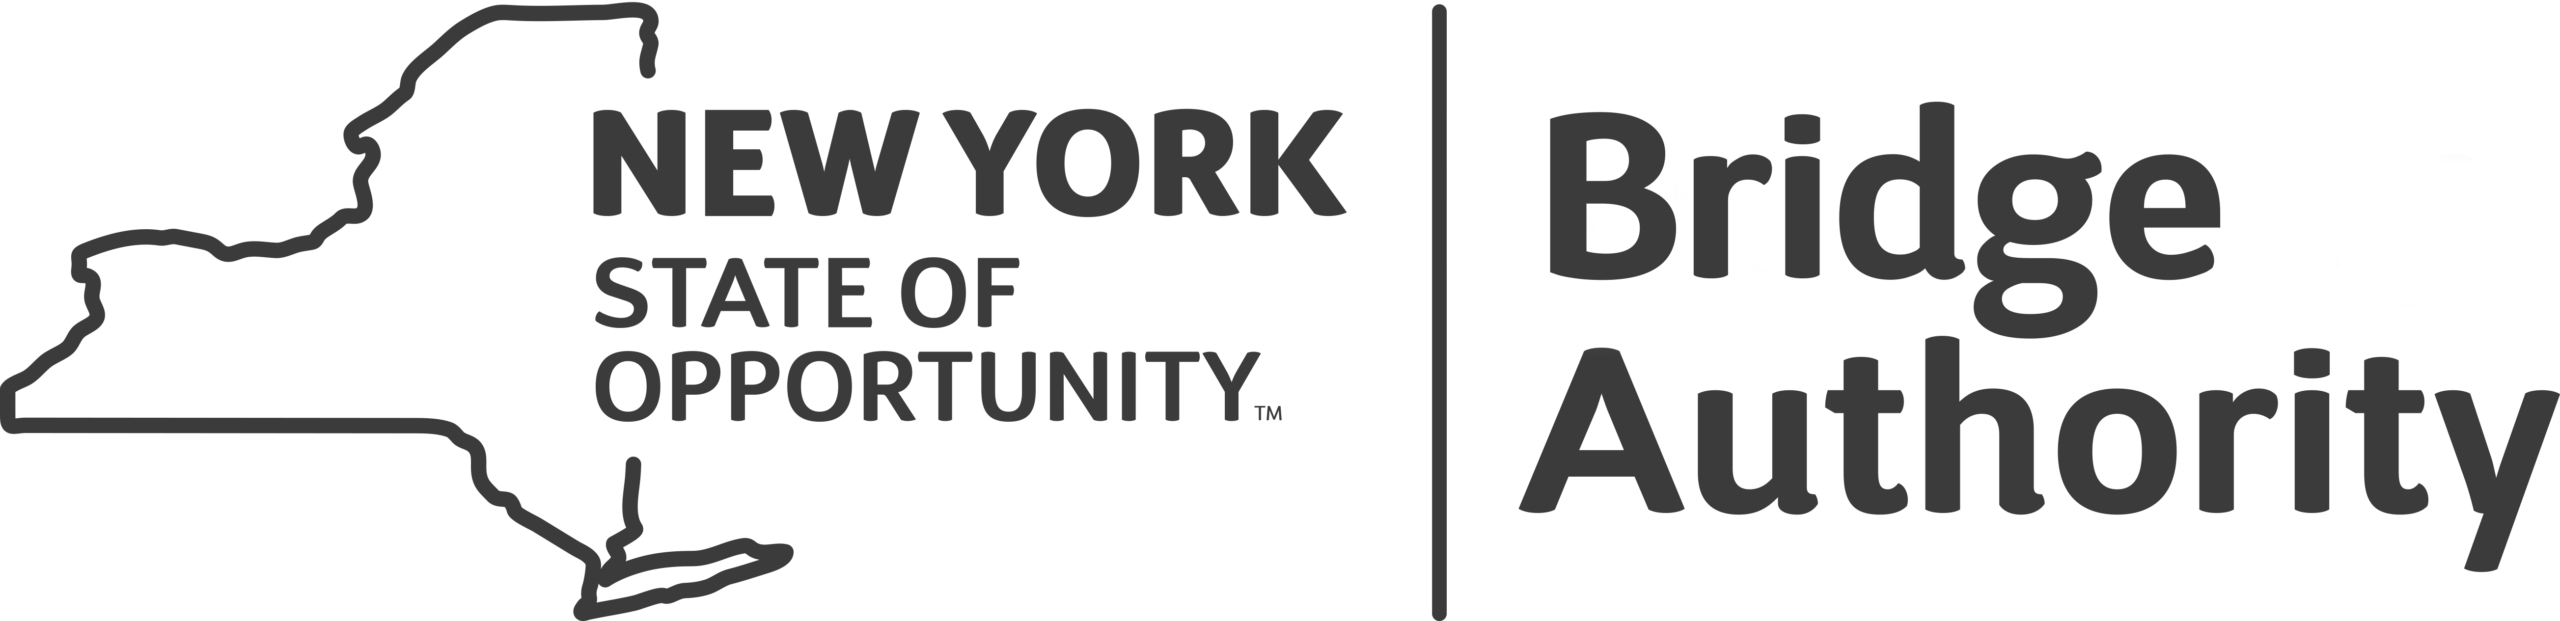 New York State Bridge Authority logo